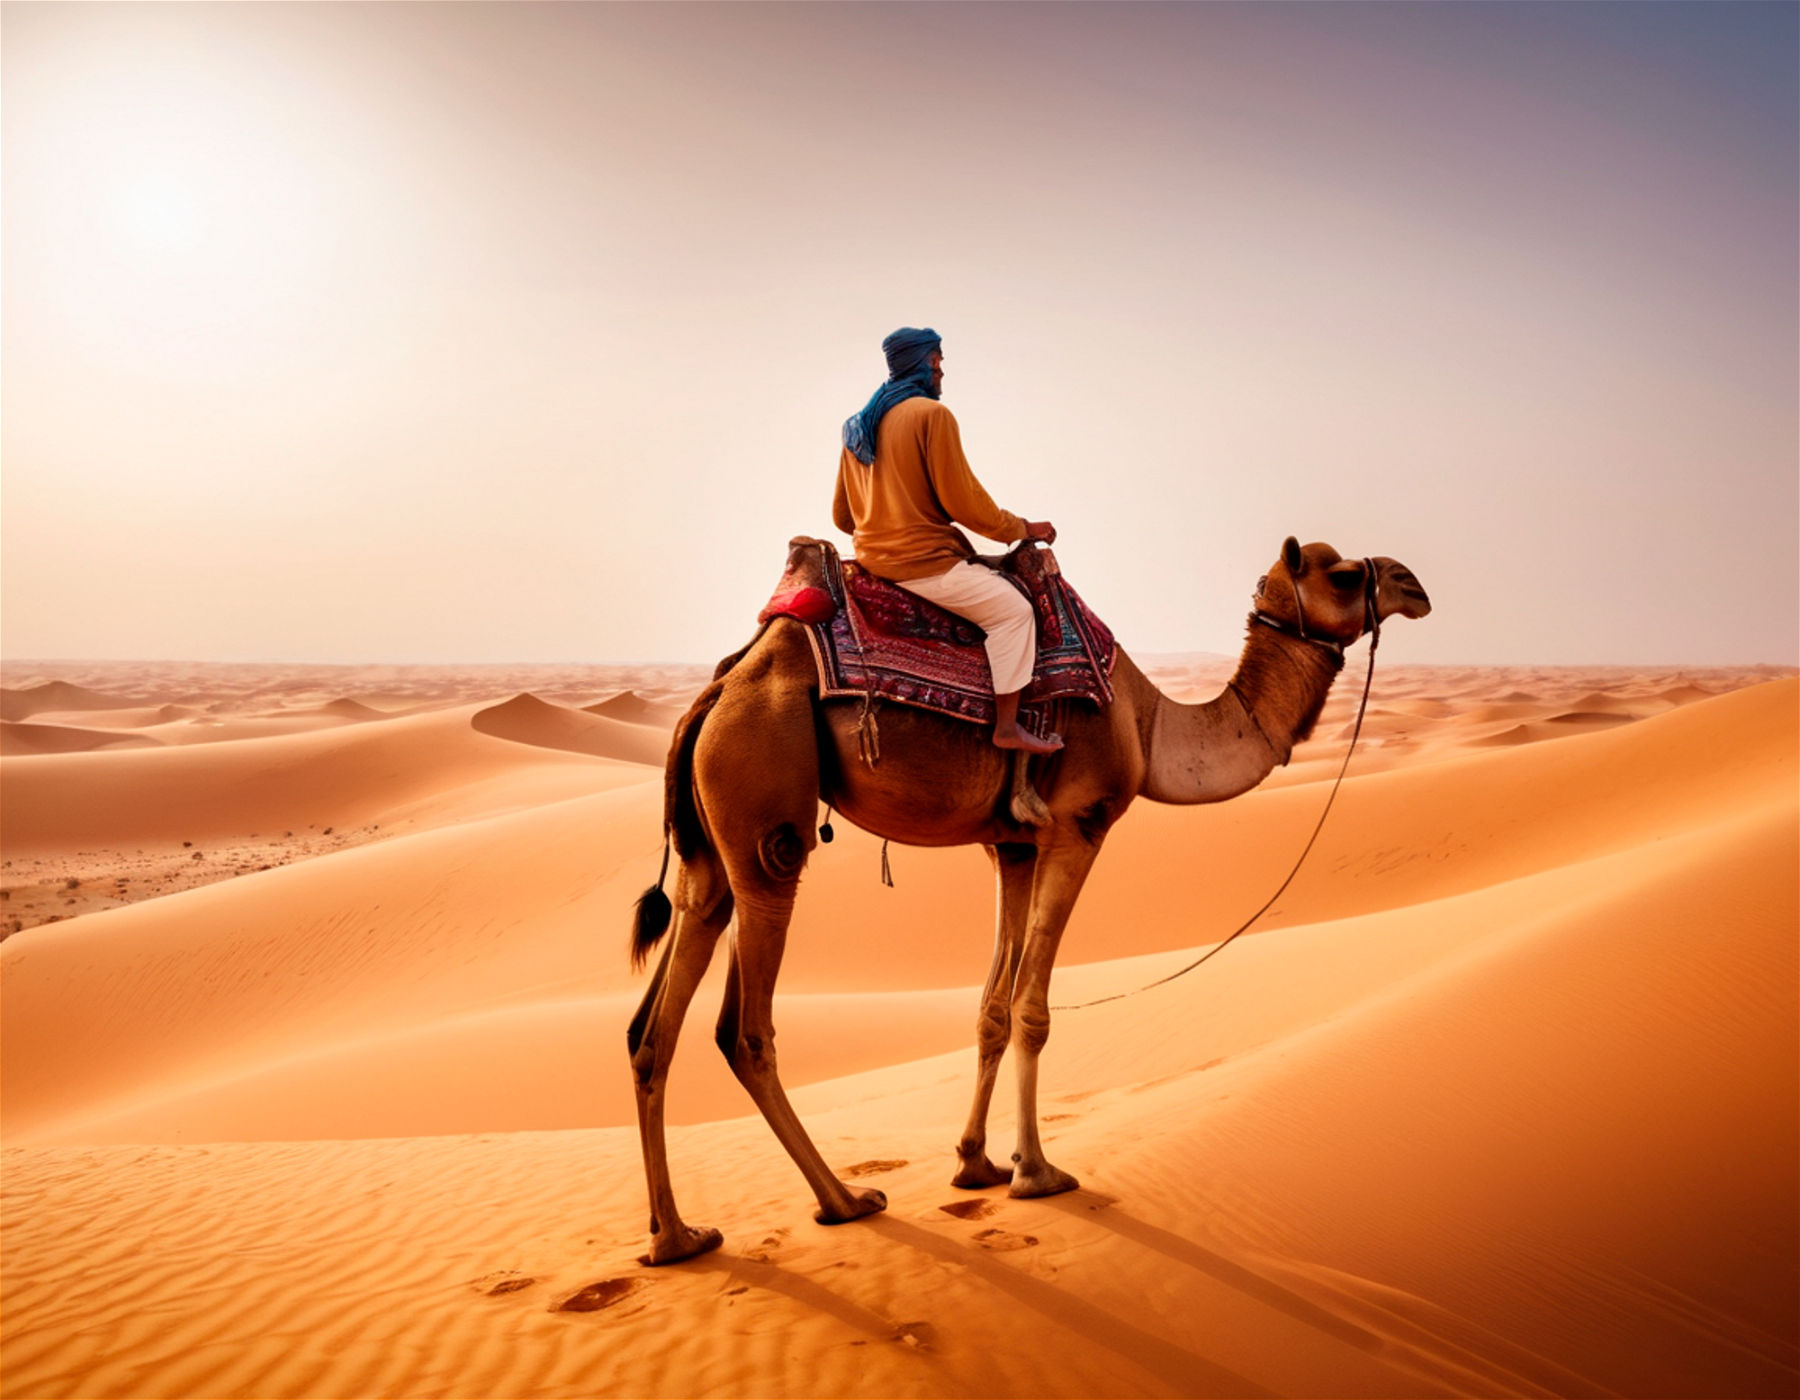 A man on a camel in the Sahara desert